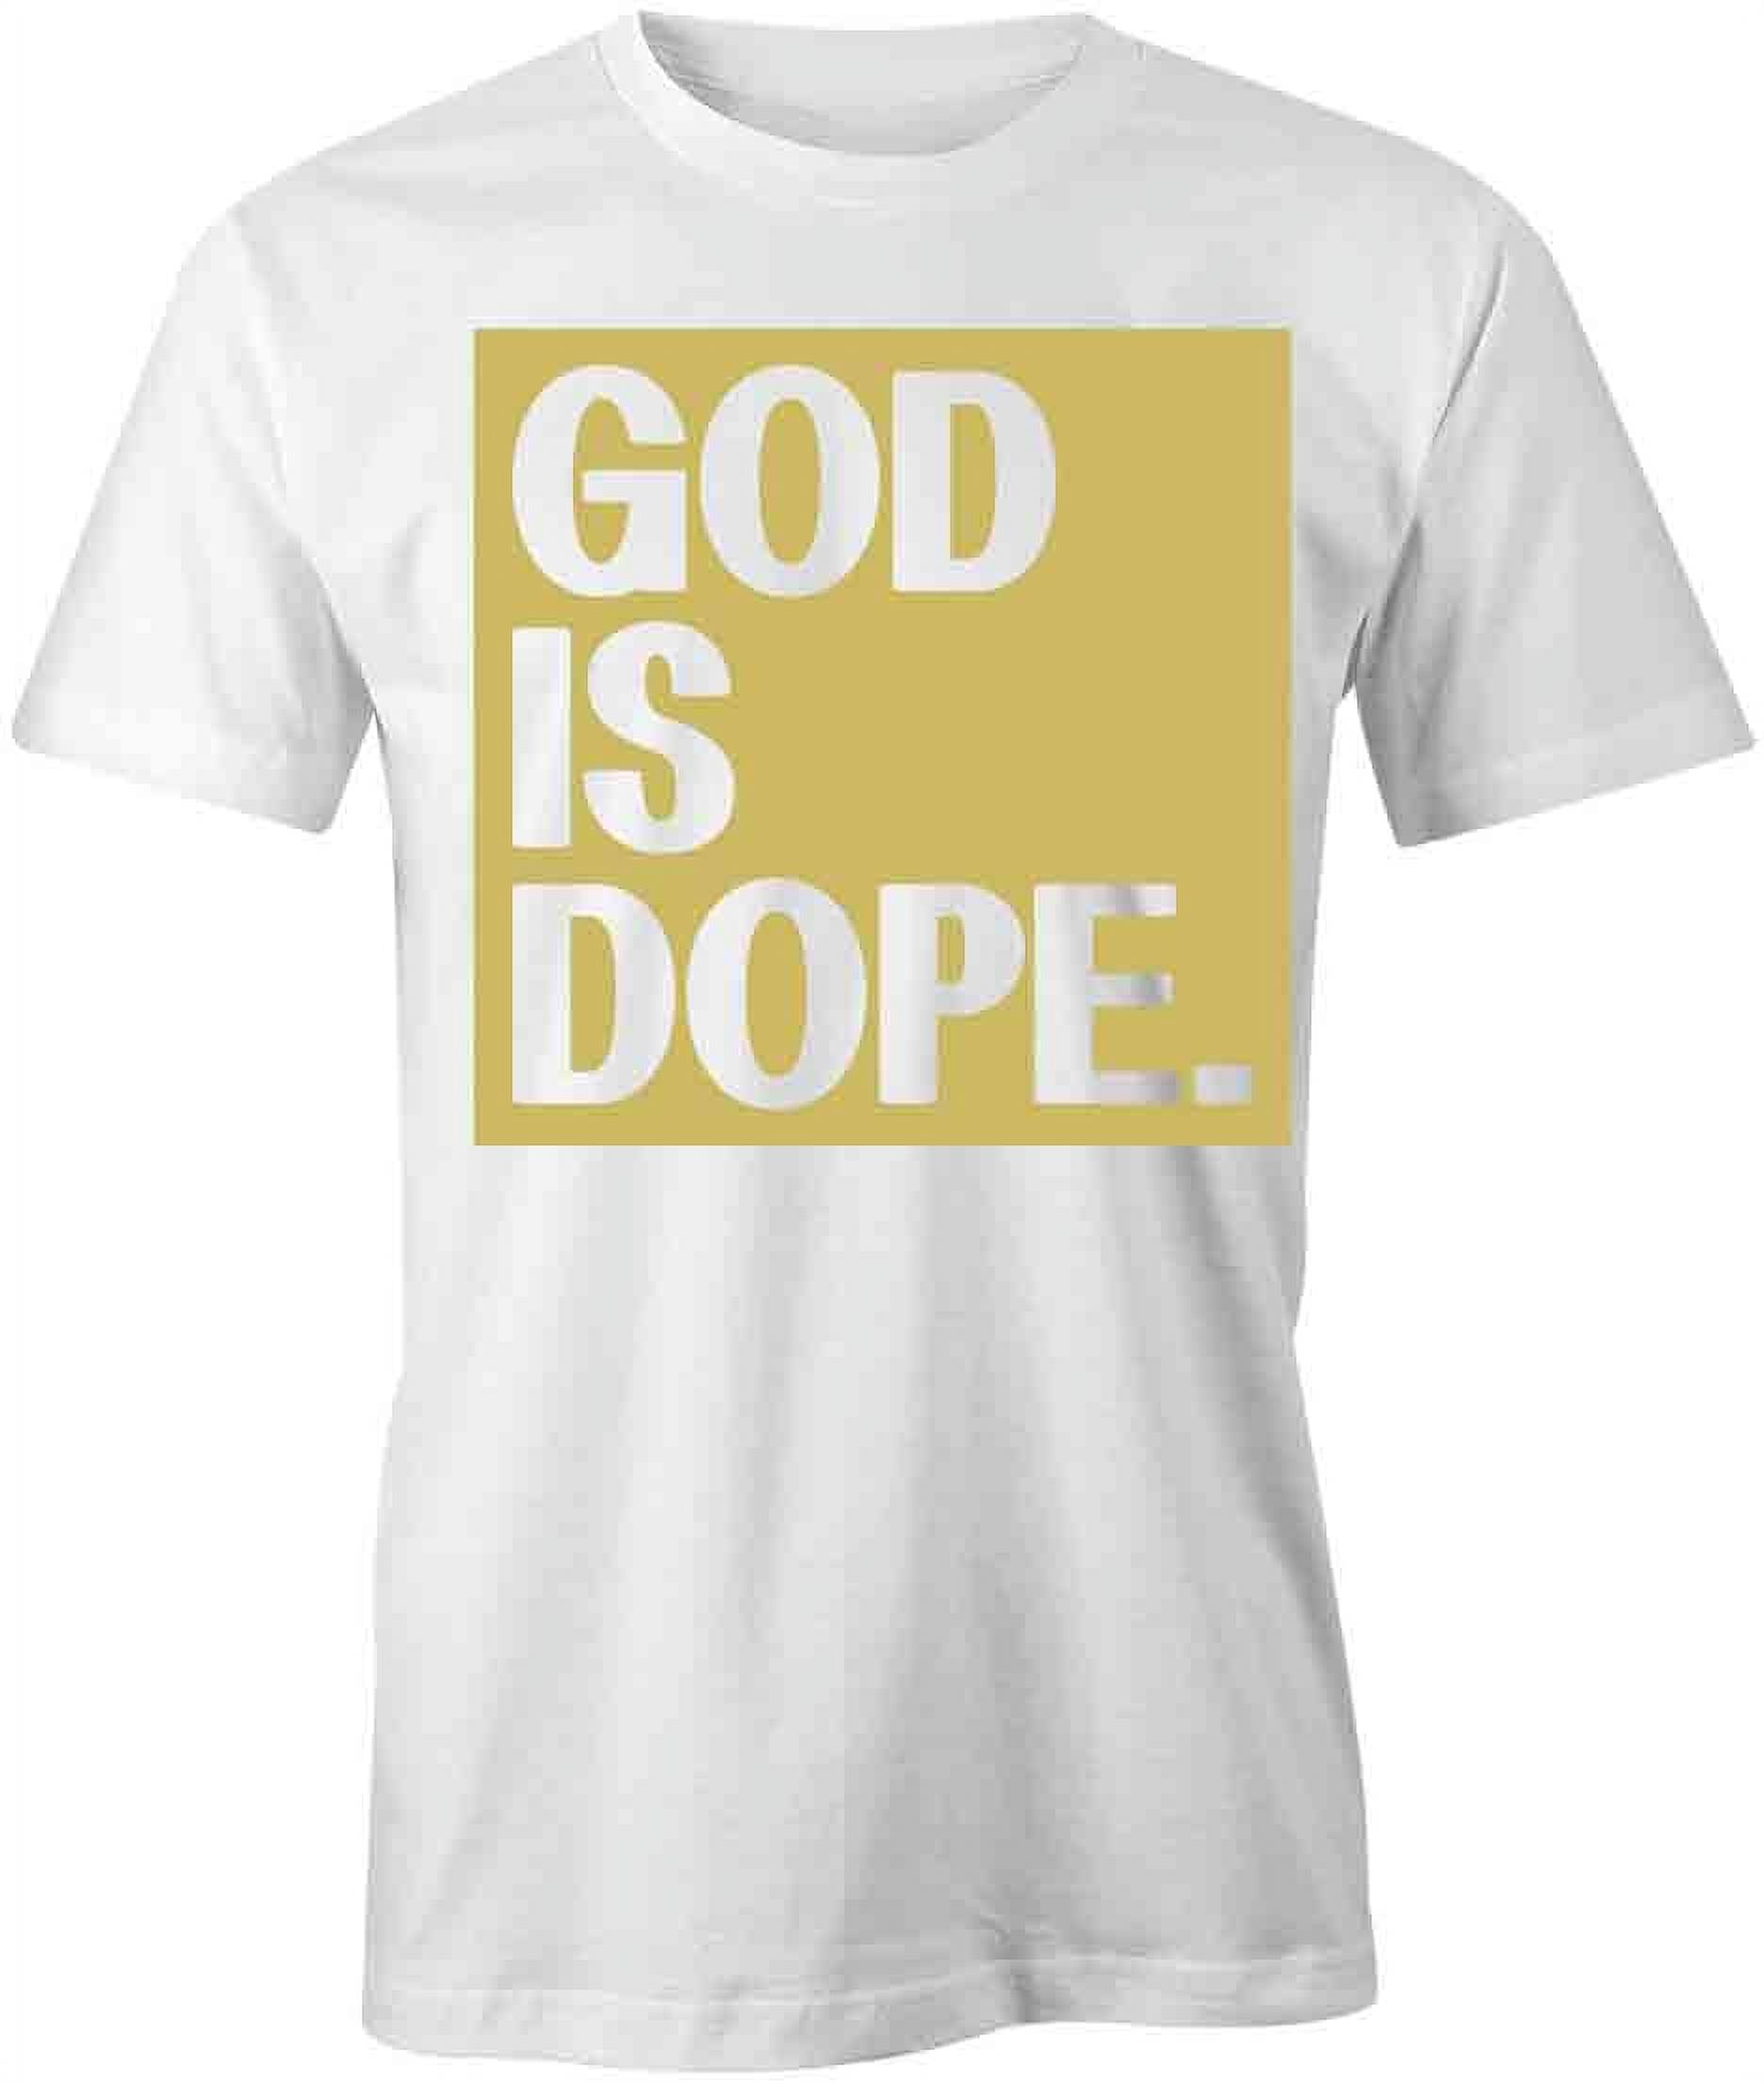 God Is Dope T-Shirt | Religious Christian White Tee Gift - Walmart.com